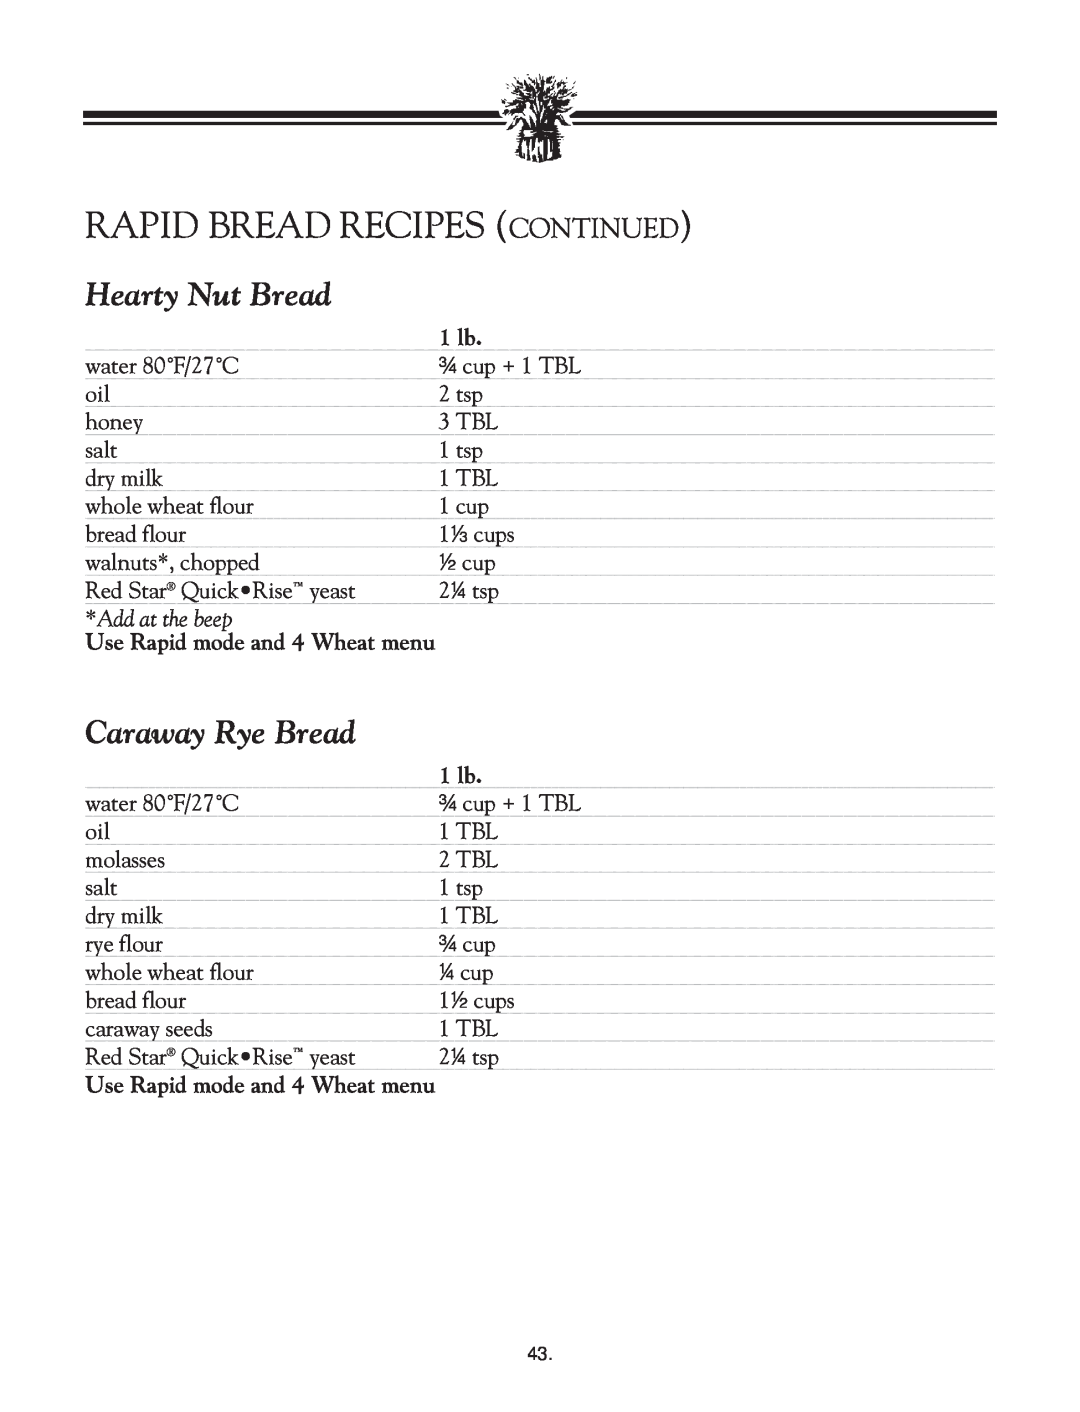 Breadman TR2828G Caraway Rye Bread, Rapid Bread Recipes Continued, Hearty Nut Bread, 1 lb, Add at the beep 